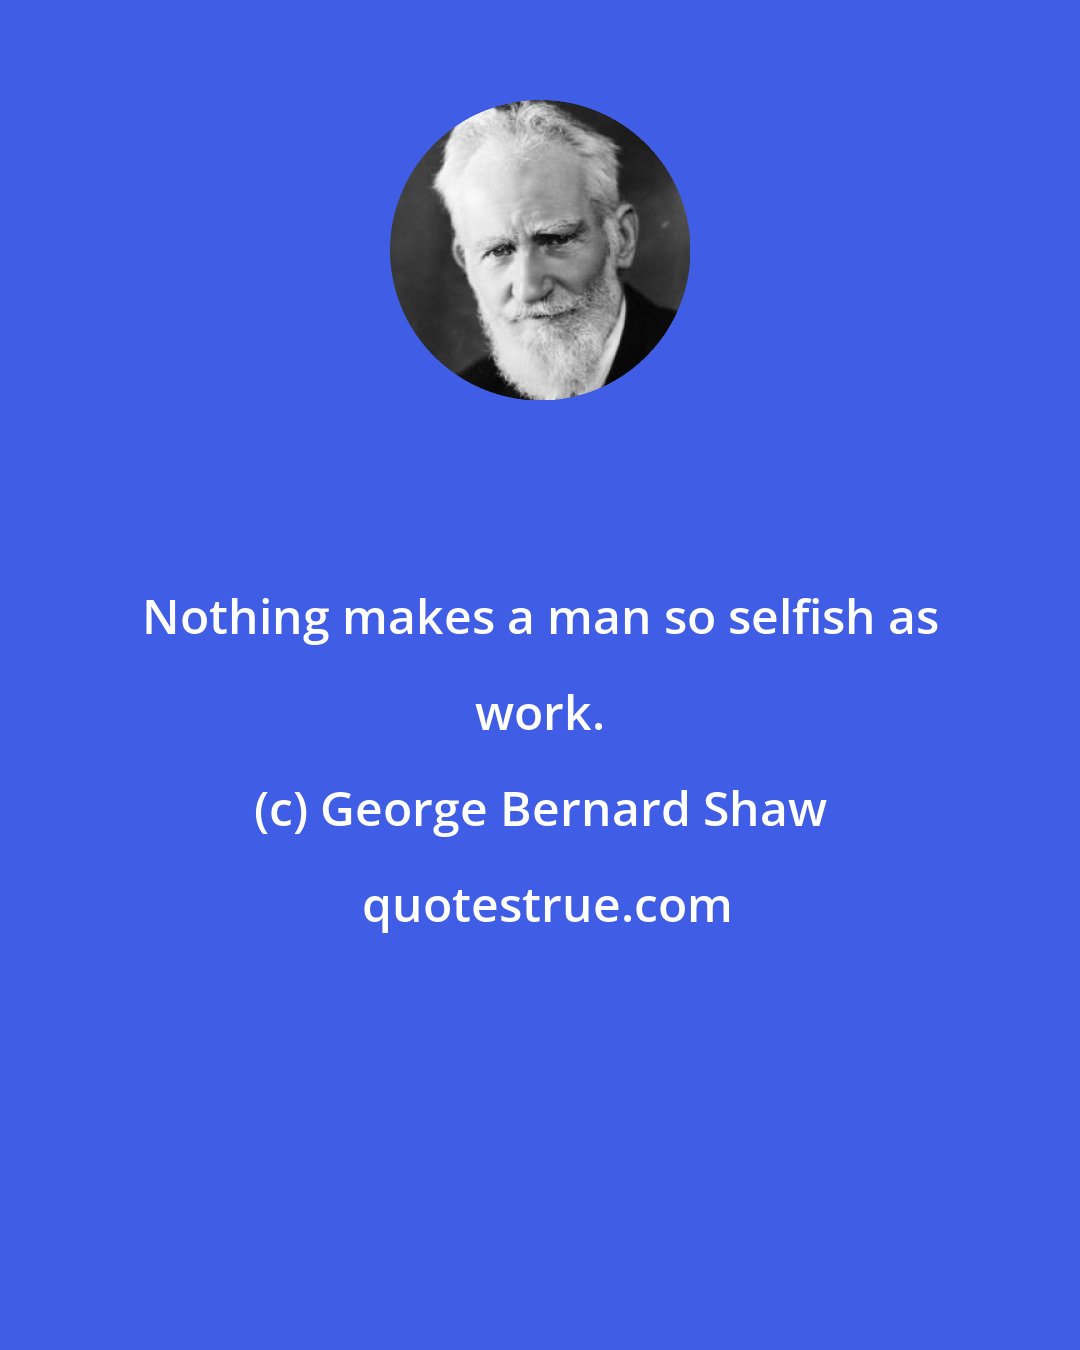 George Bernard Shaw: Nothing makes a man so selfish as work.